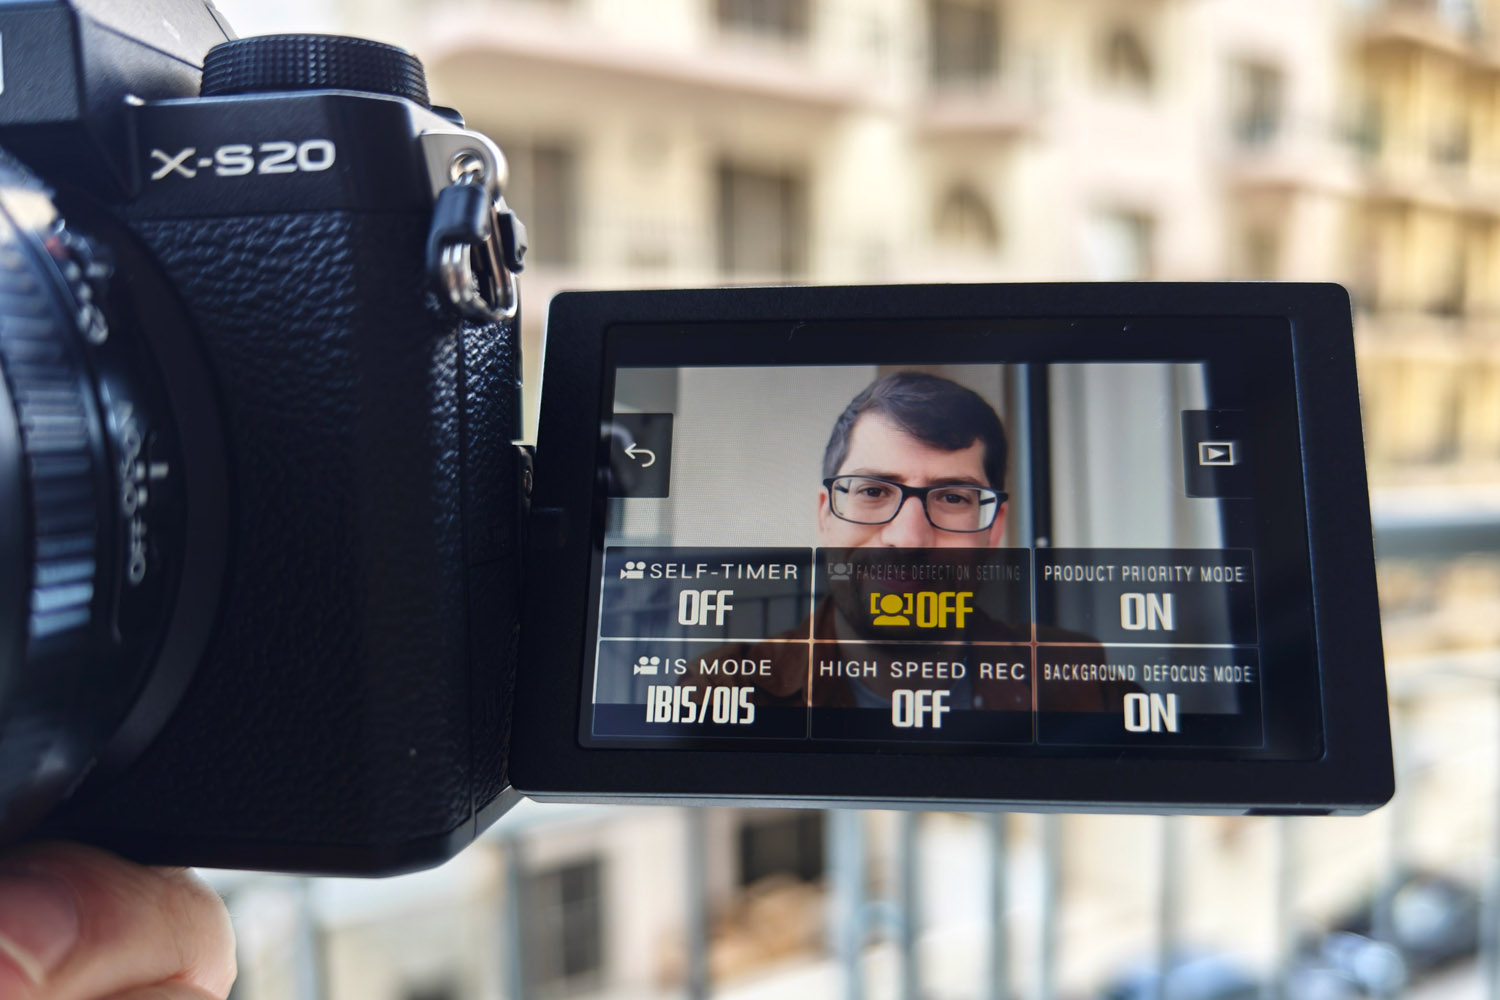 Fujifilm X-S20 hands-on vlog settings